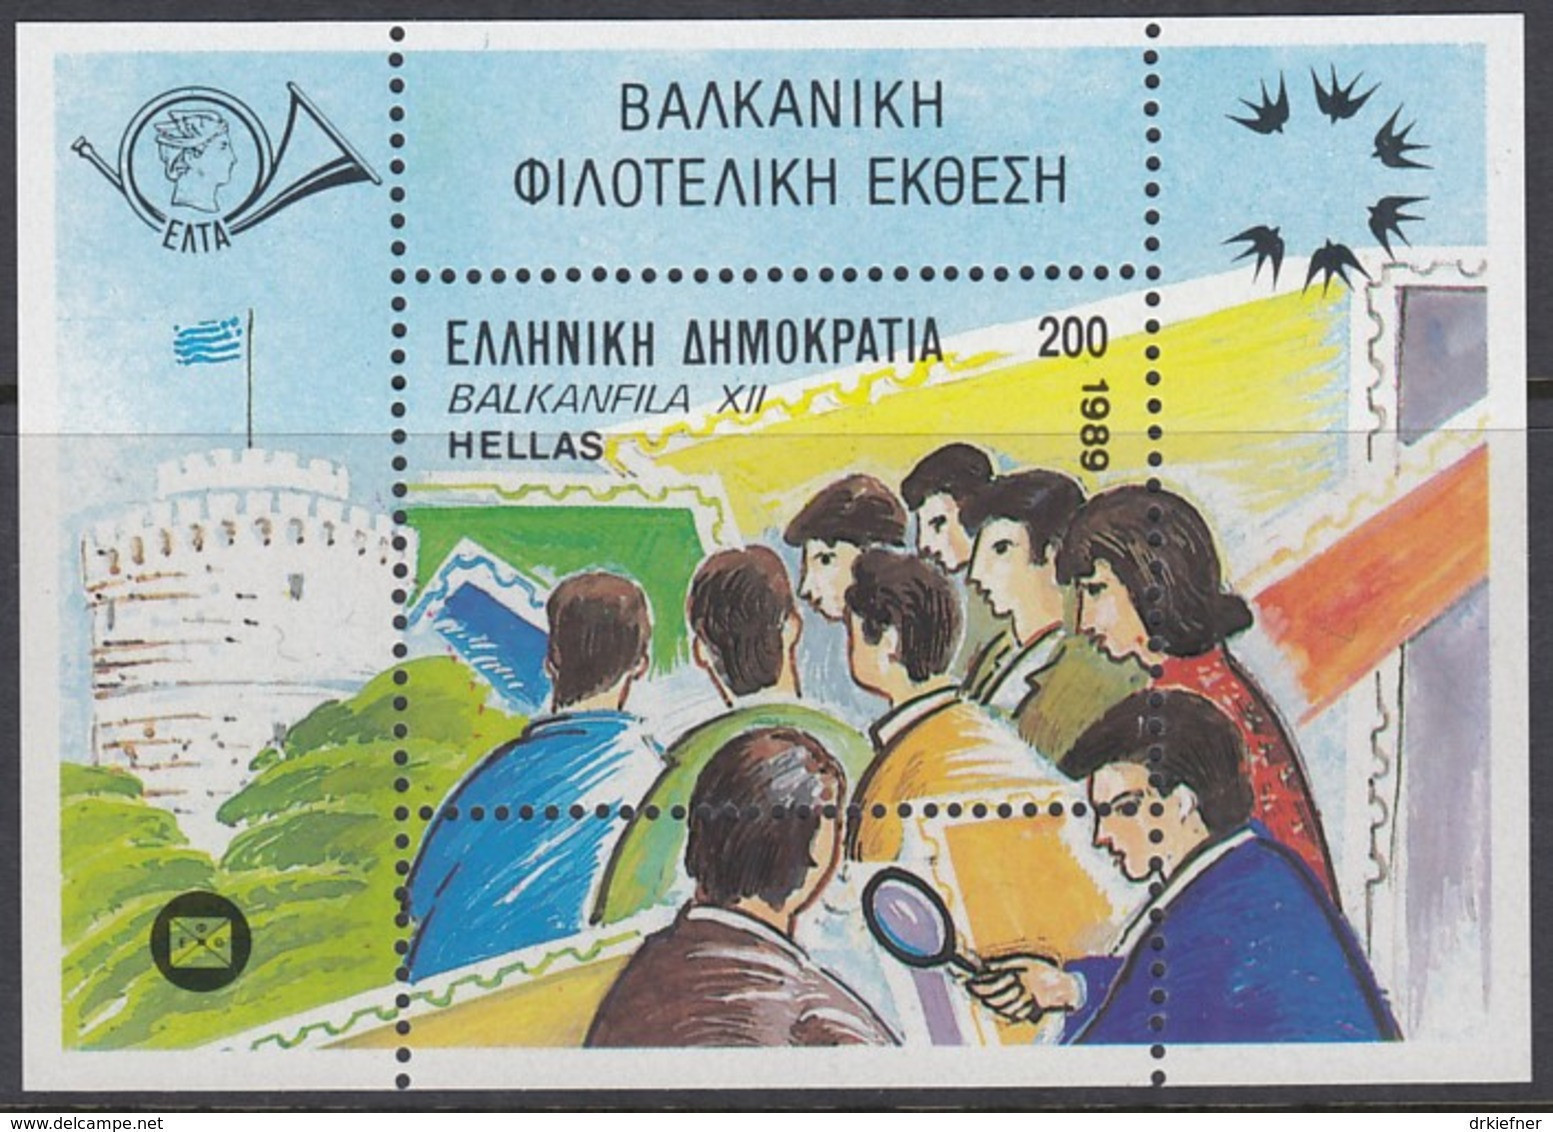 GRIECHENLAND Block 7, Postfrisch **, Internationale Briefmarkenausstellung BALKANFILA ’89, Thessaloniki, 1989 - Blocks & Sheetlets